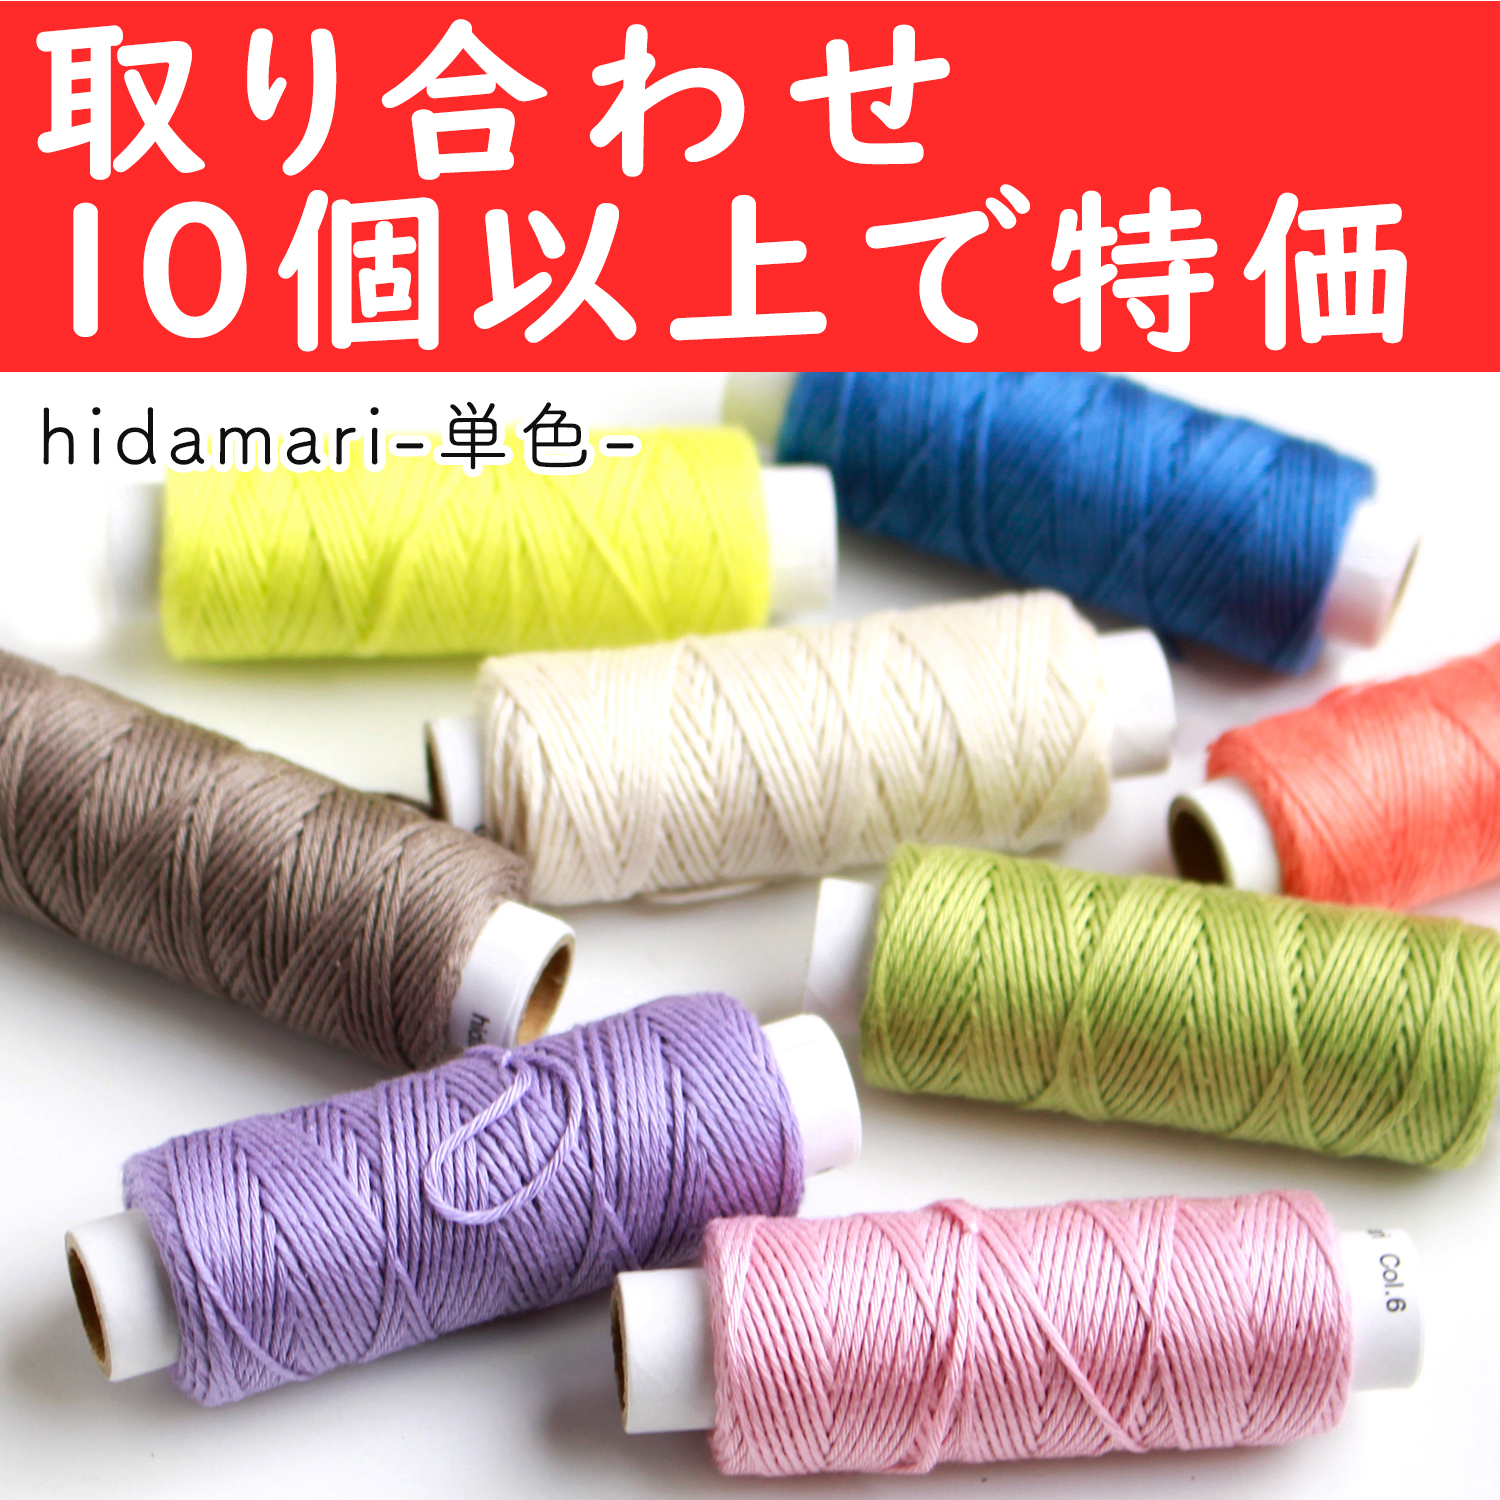 【renewal】CS122301-OVER10 Cosmo Sashiko Thread (Solid Color) - hidamari - for 10 or more pcs of any colors(pcs)